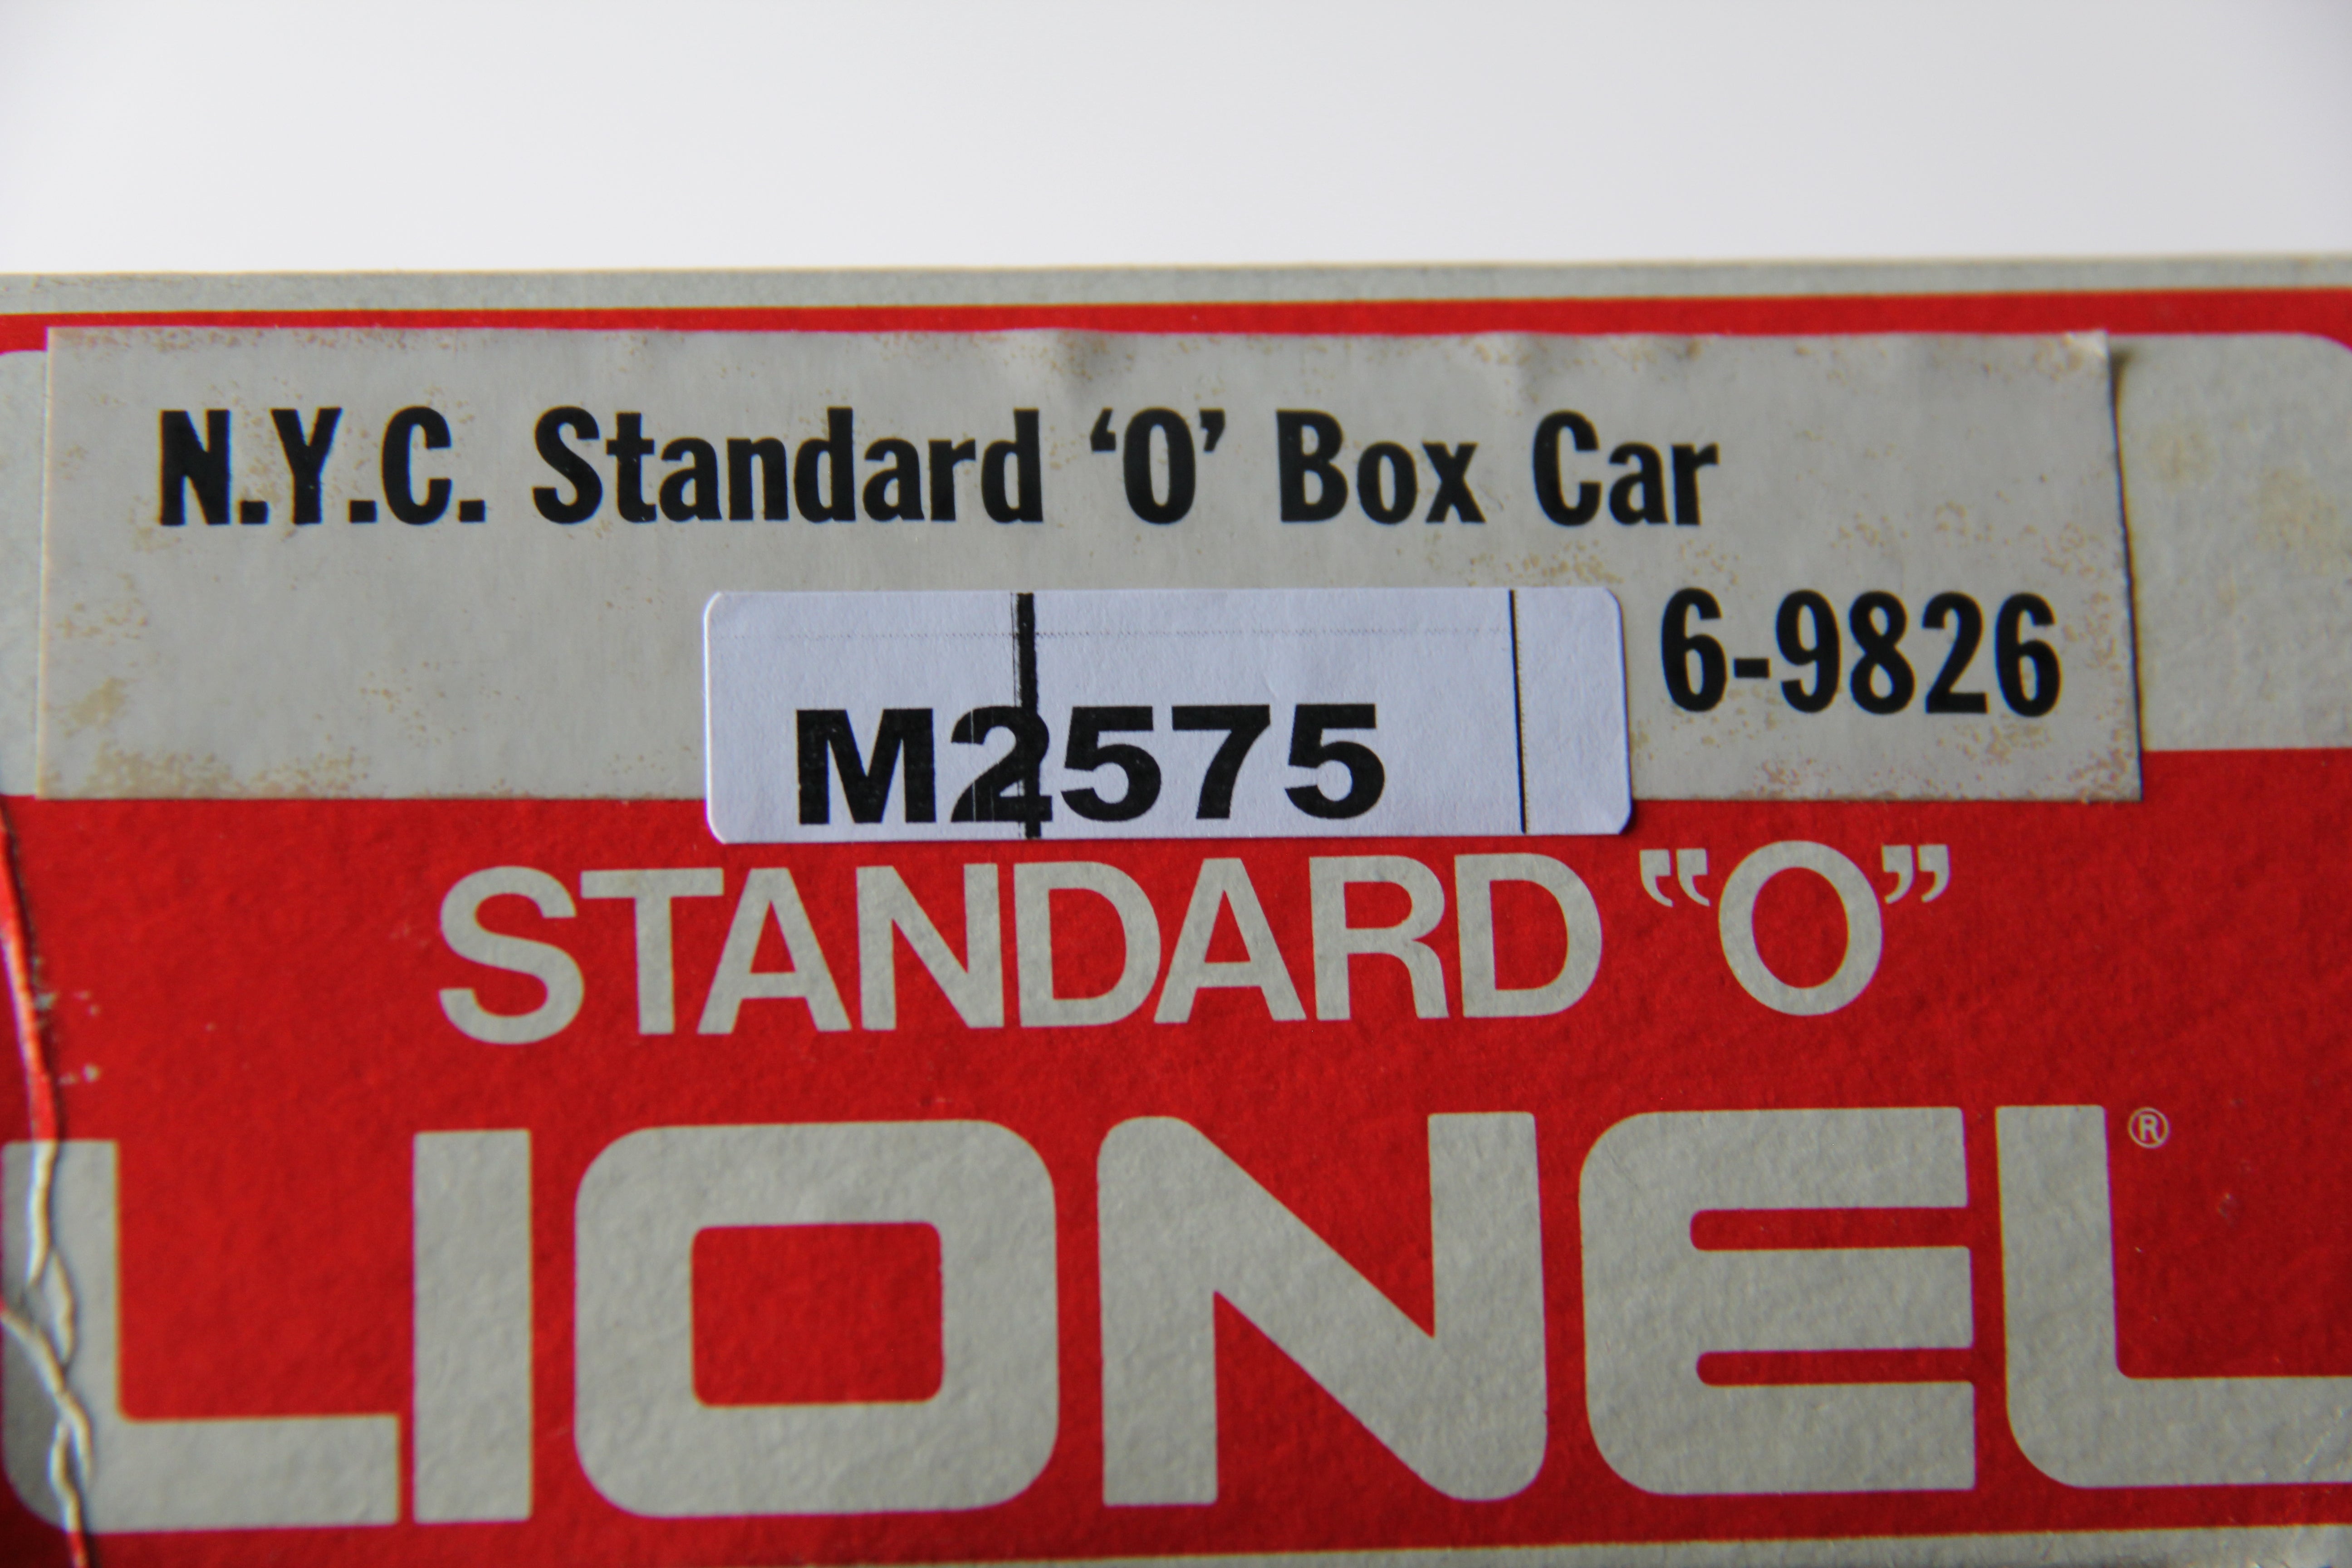 Lionel 6-9826 NYC Standard "O" Box Car -Second hand-M2575